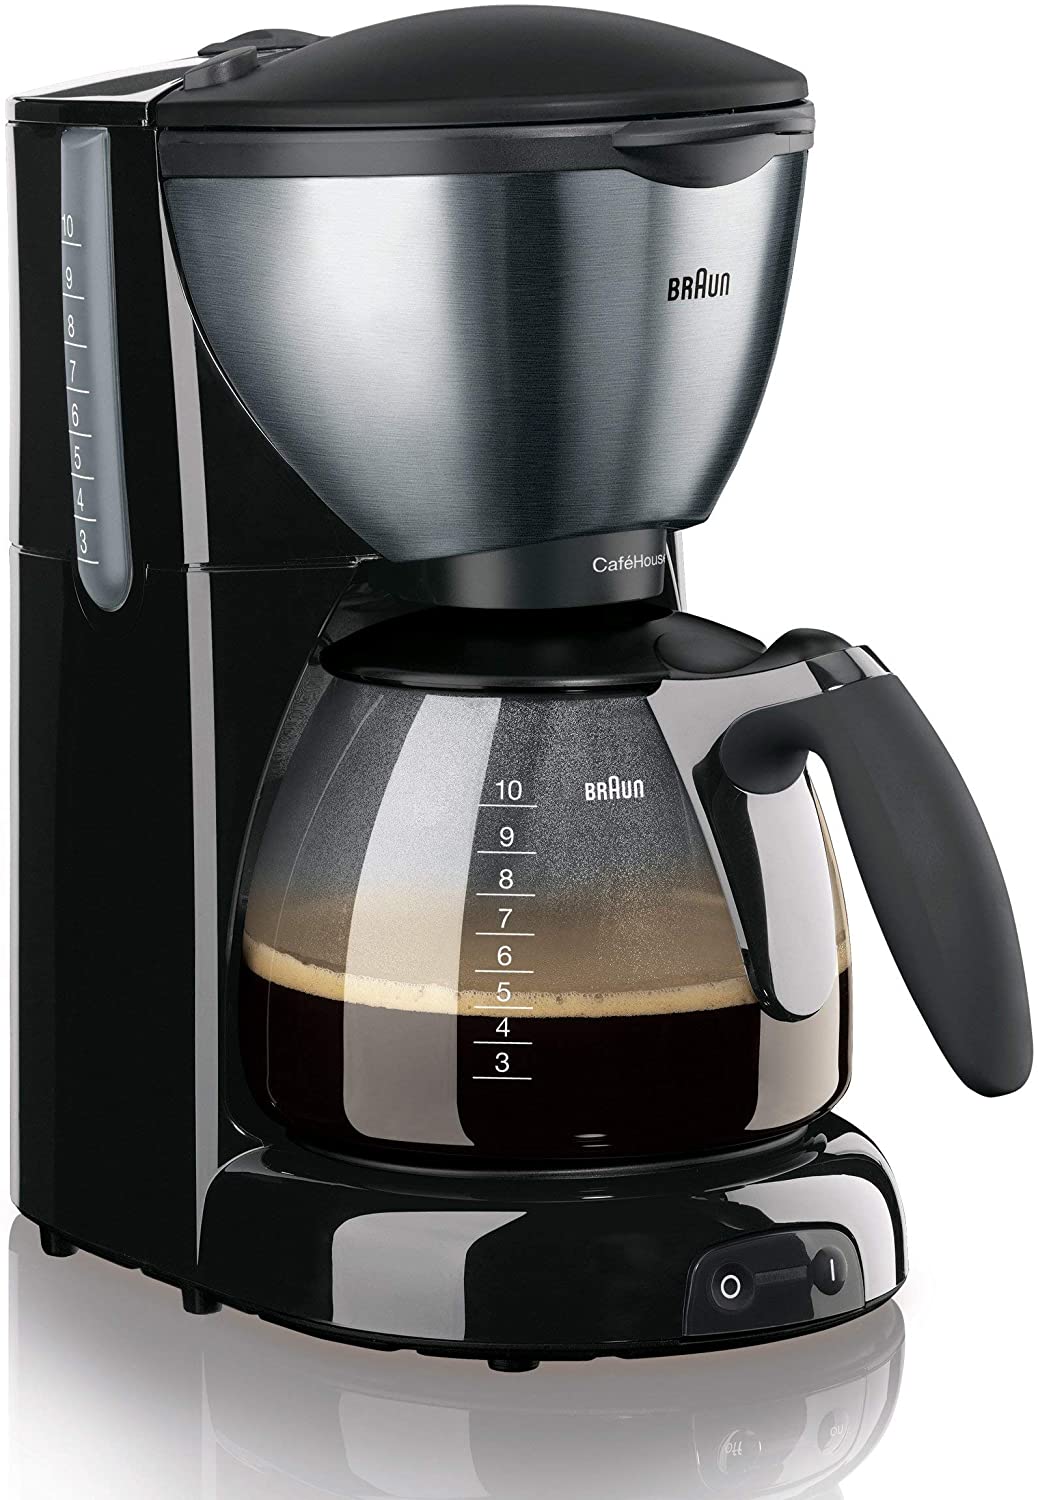 Braun KF 570/1 coffee maker - coffee makers (freestanding, Ground coffee, Semi-auto, Coffee, Drip coffee maker, Black, Stainless steel)